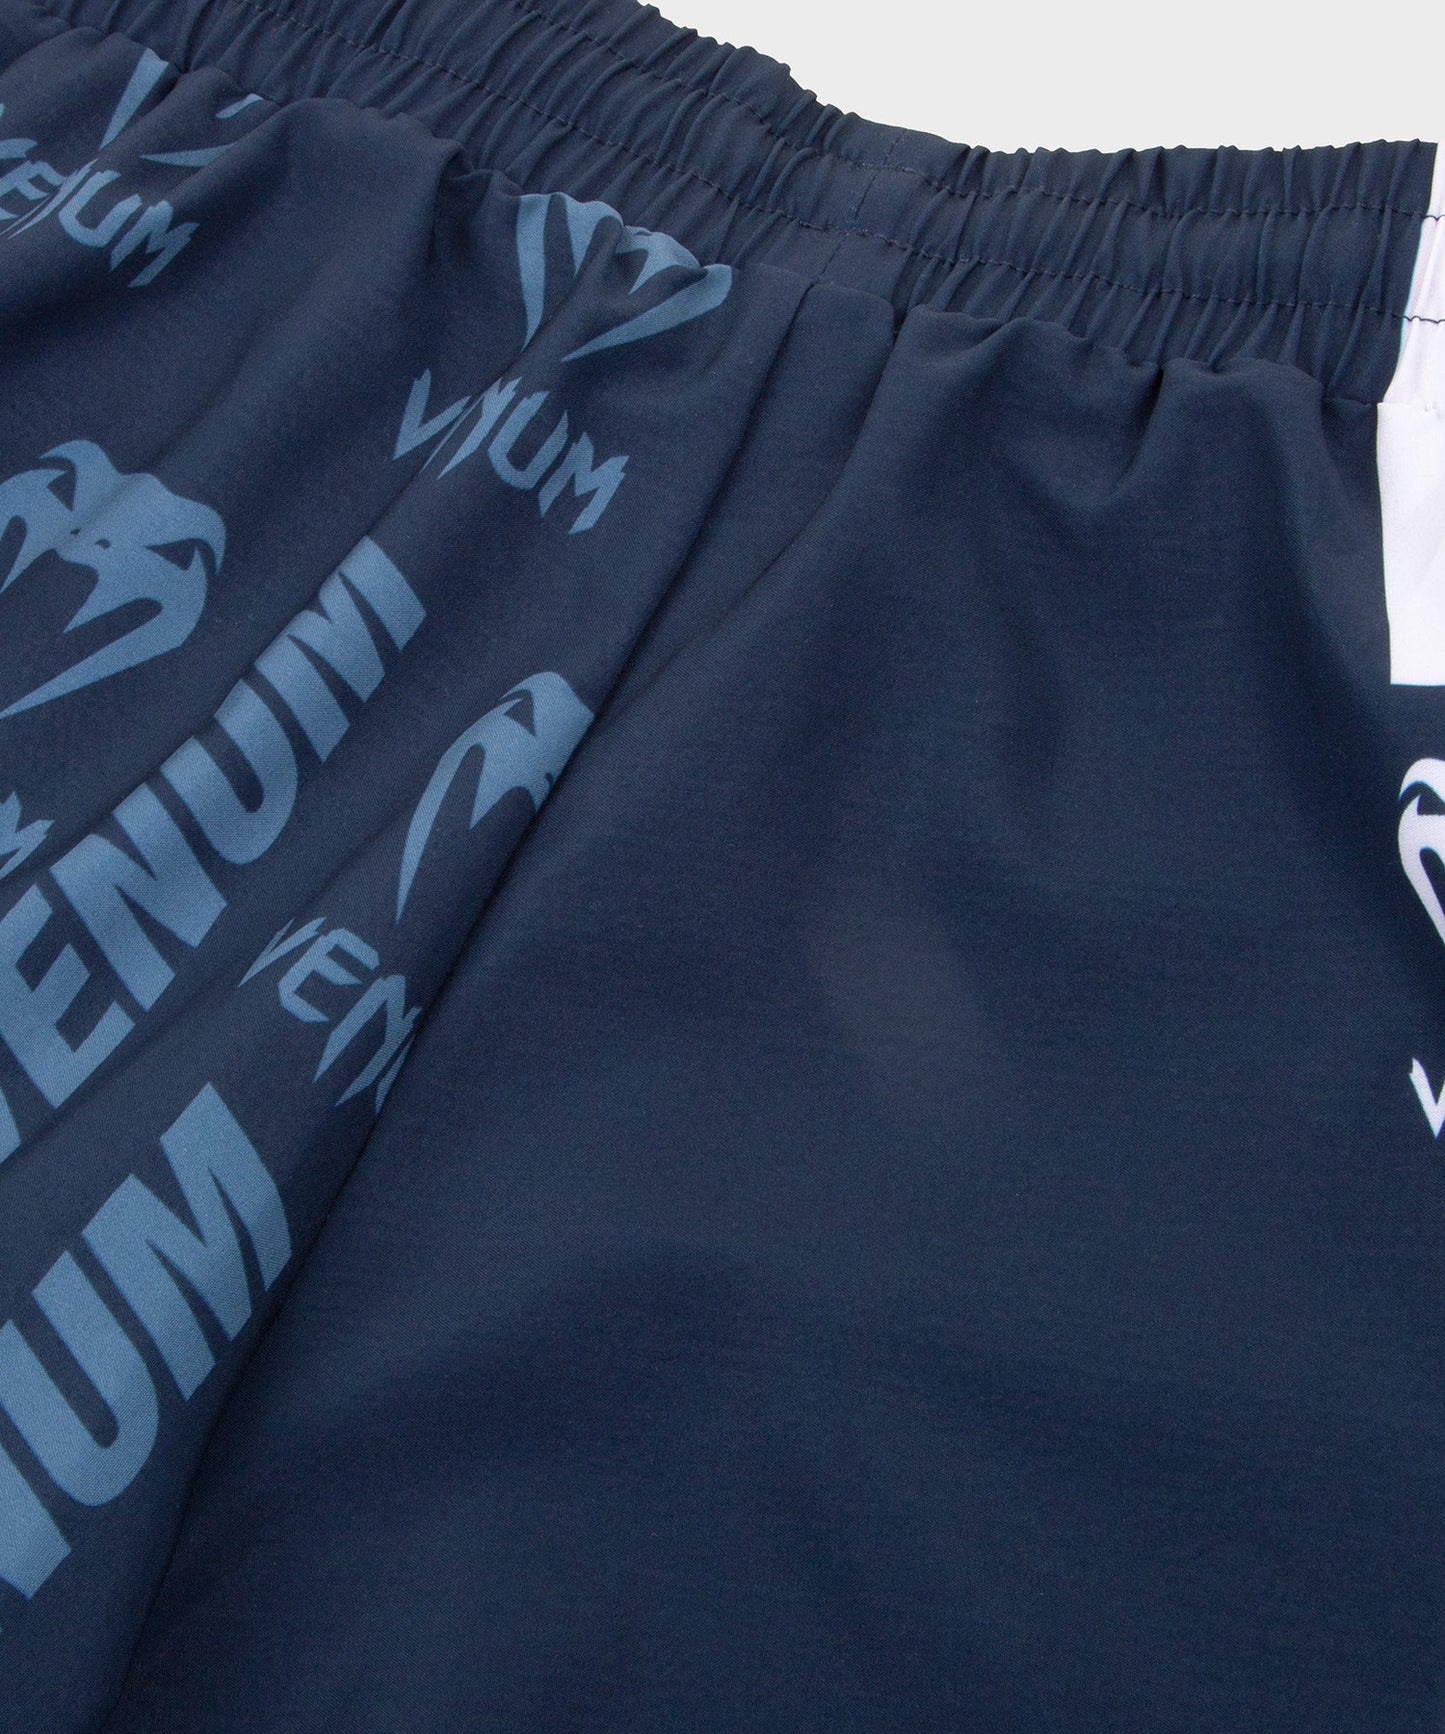 Venum Logos Training Shorts - Navy Blue/White